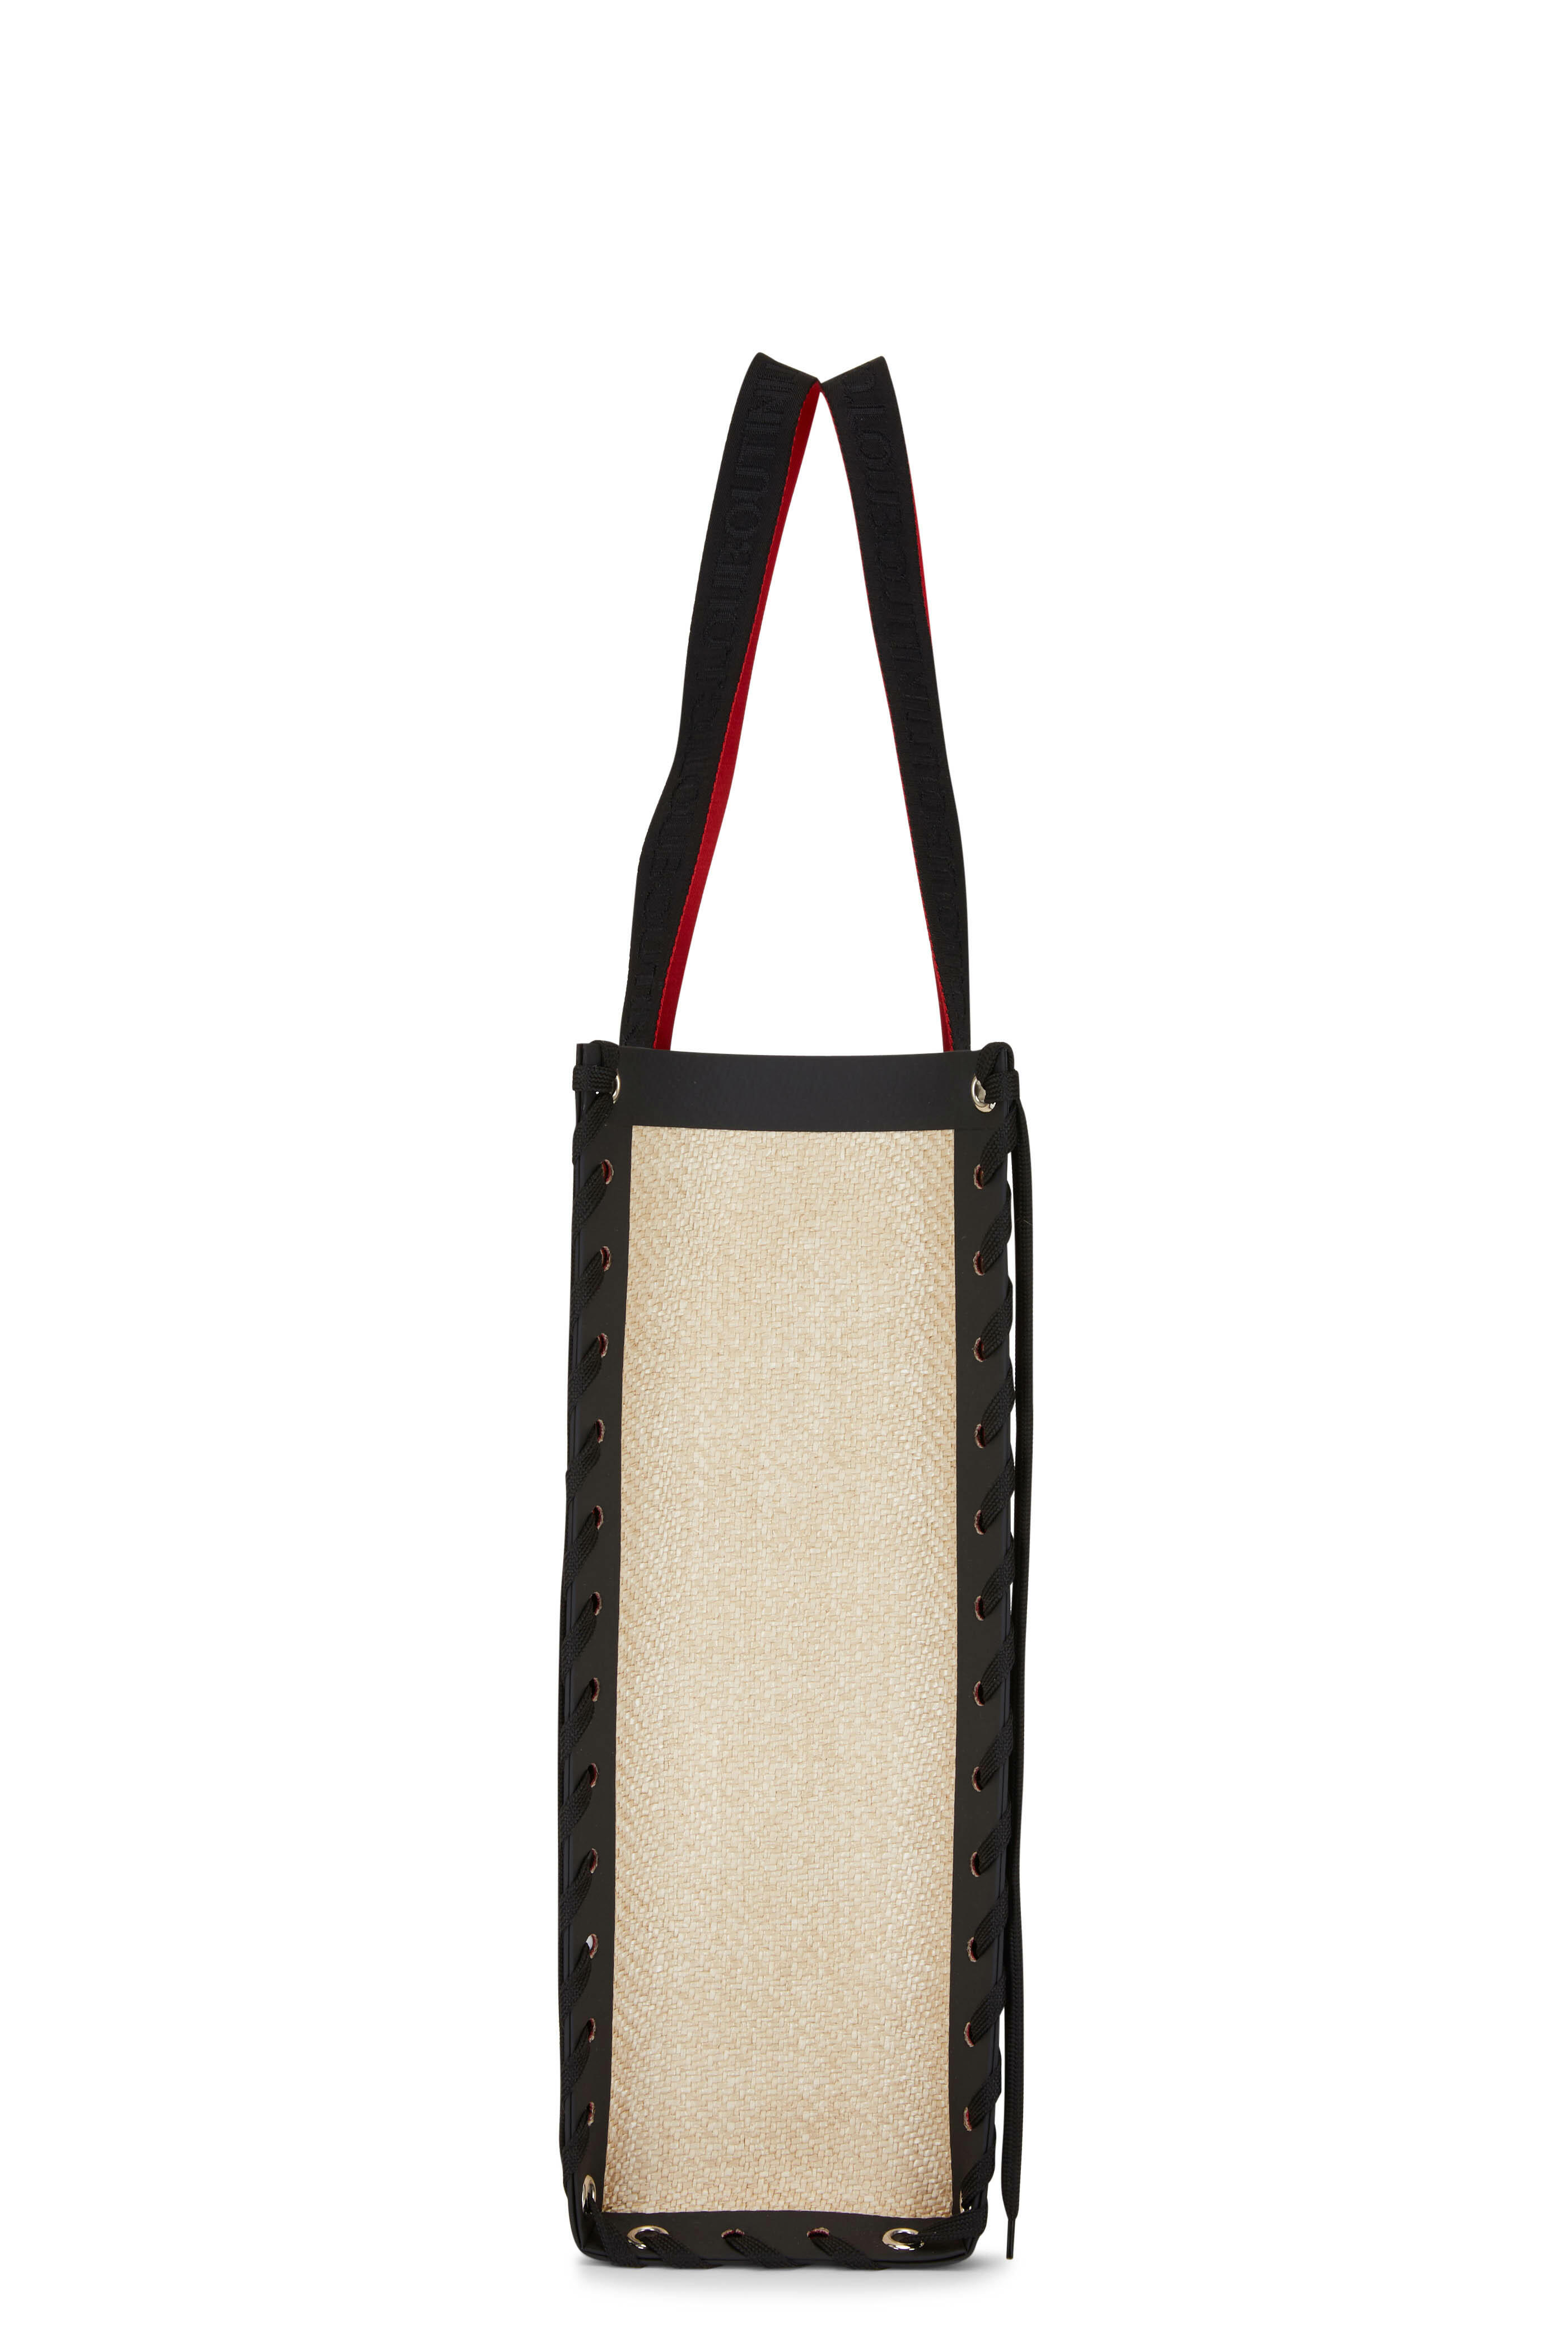 Louis Vuitton X Christian Louboutin The Shopper Bag